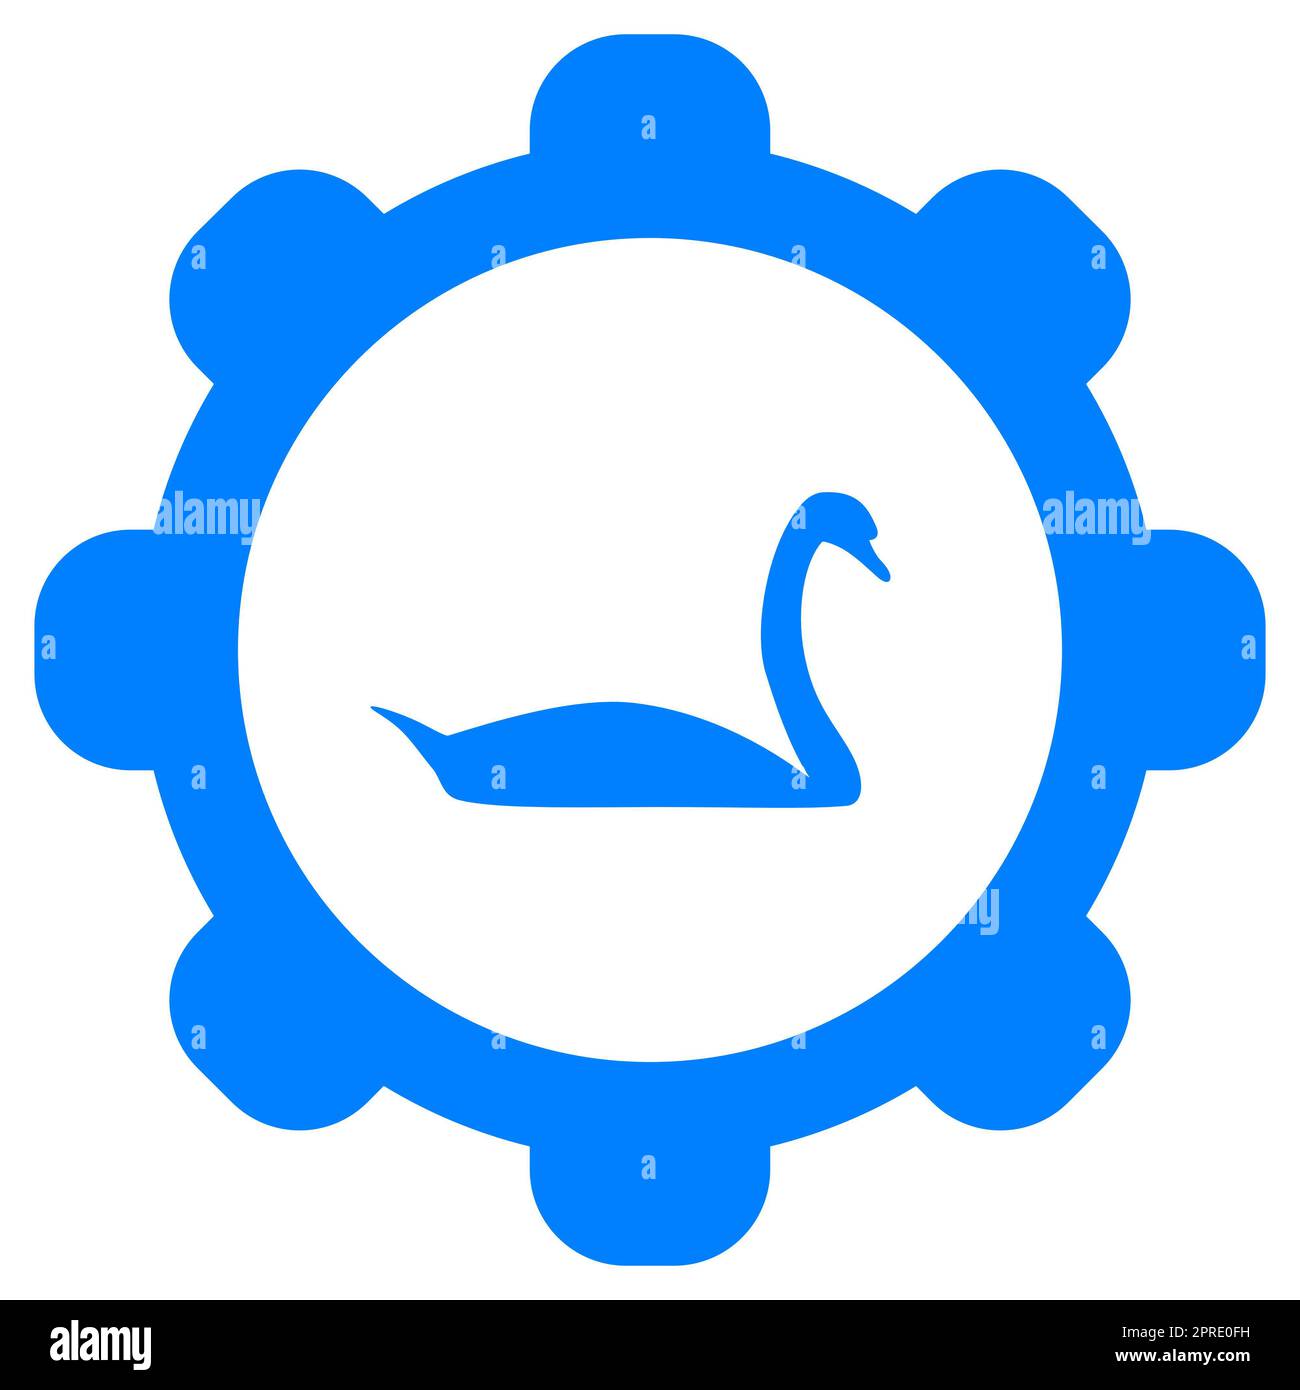 Swan and wheel Stock Photo